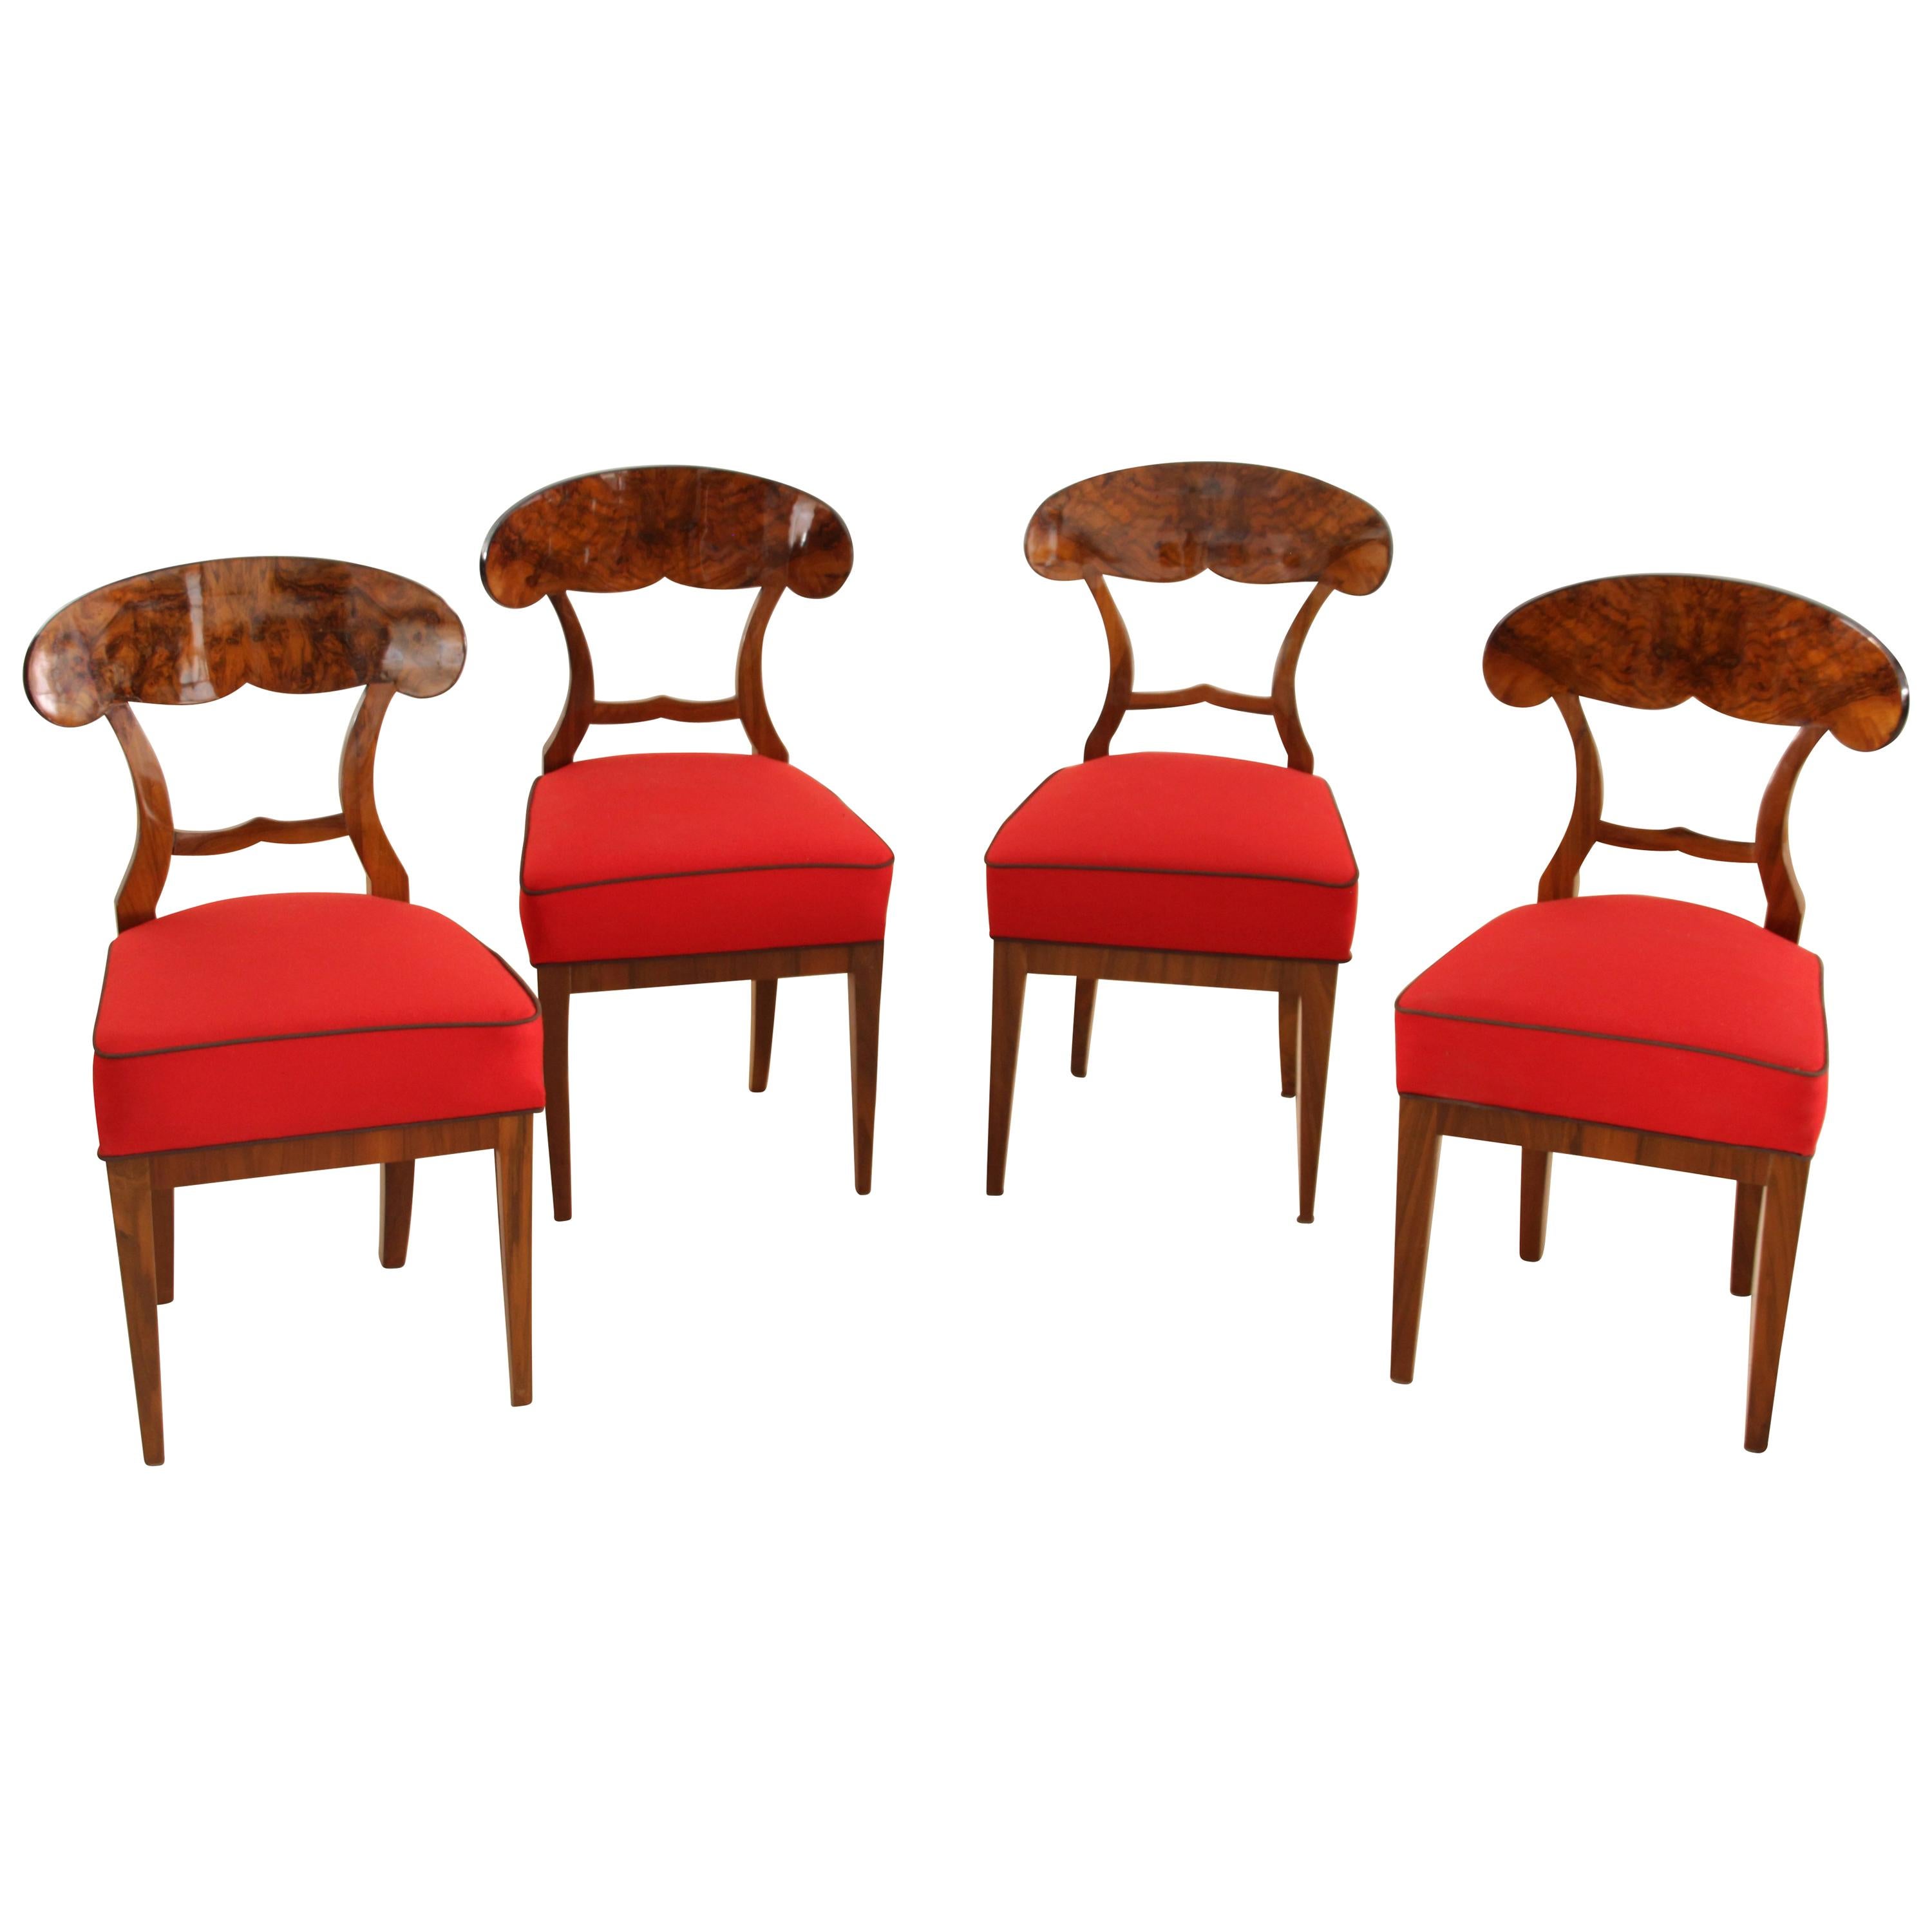 Four Biedermeier Shovel Chairs, Walnut, Vienna/Austria, circa 1845